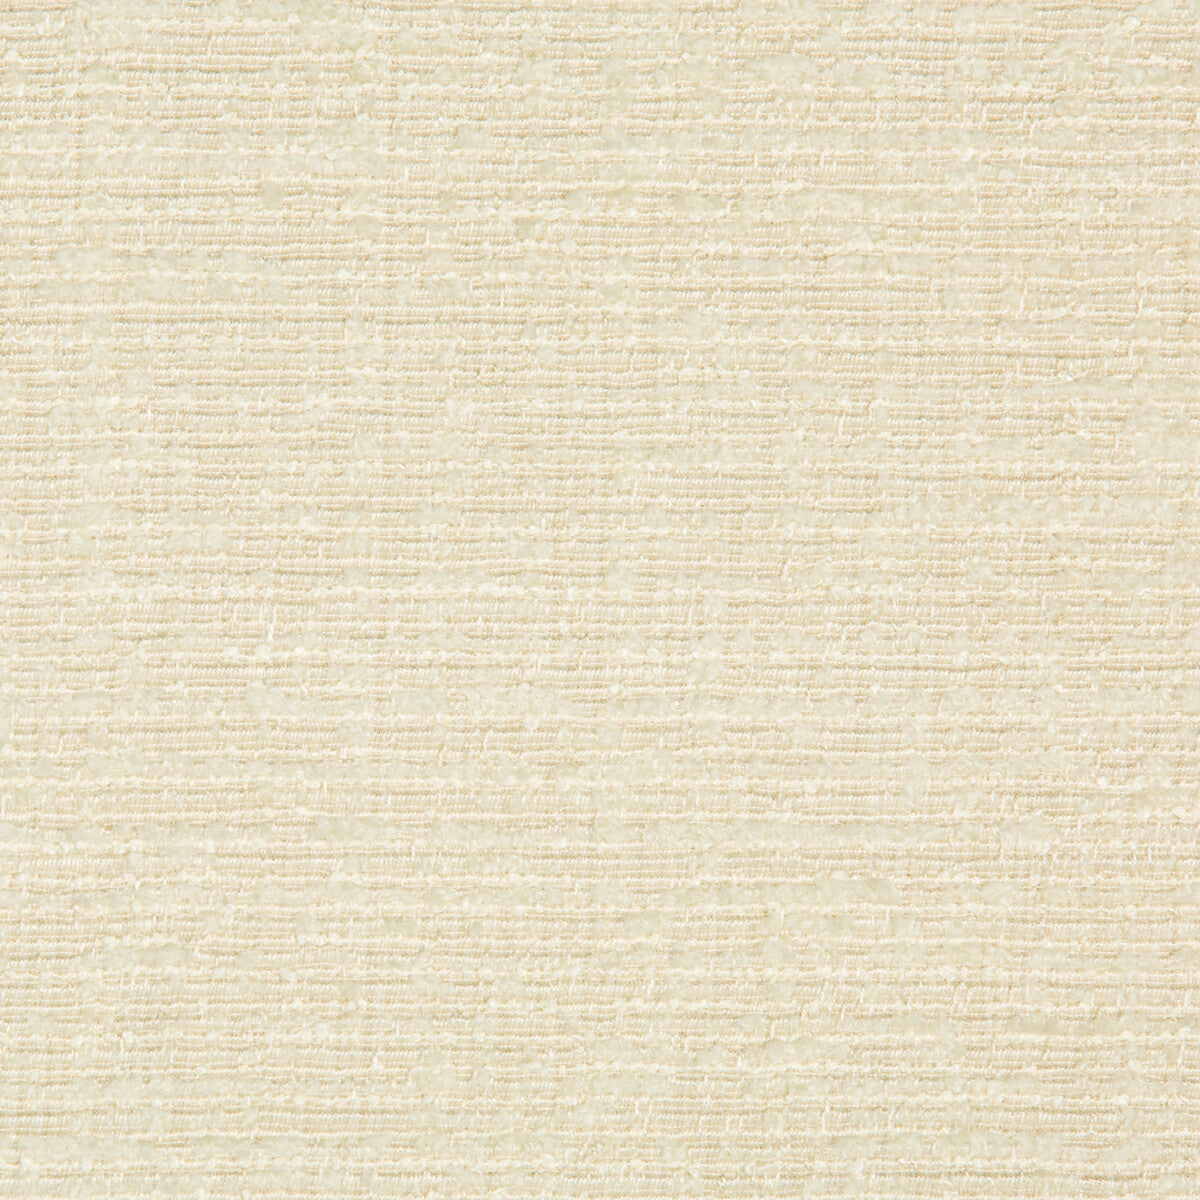 Kravet Design fabric in 34701-1 color - pattern 34701.1.0 - by Kravet Design in the Gis collection